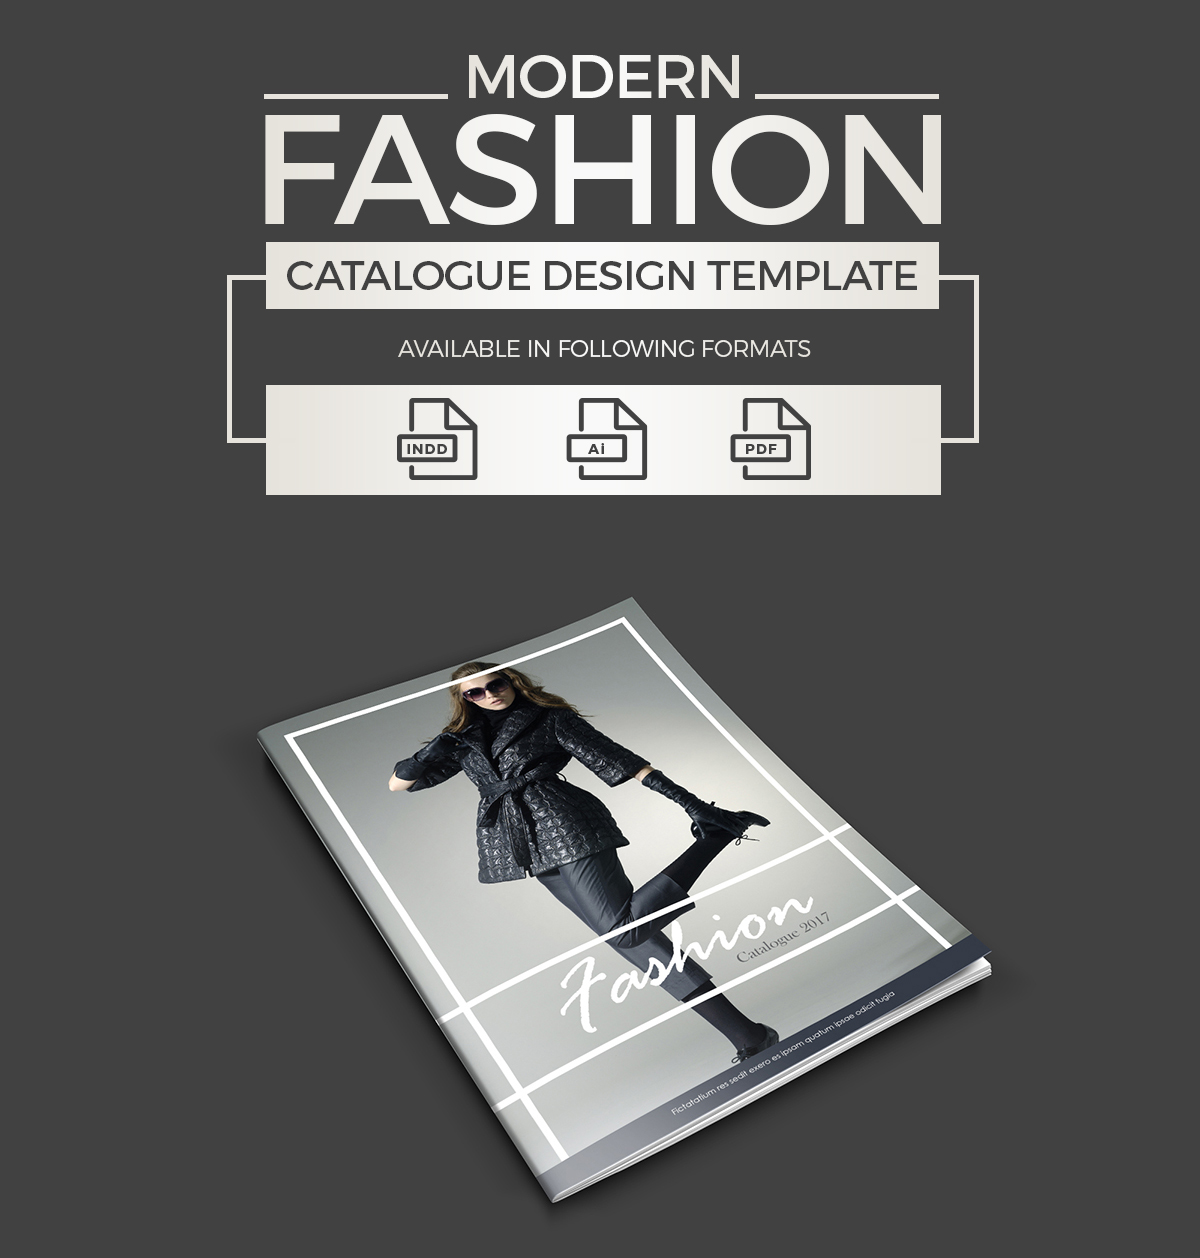 modern-fashion-catalogue-design-template-1